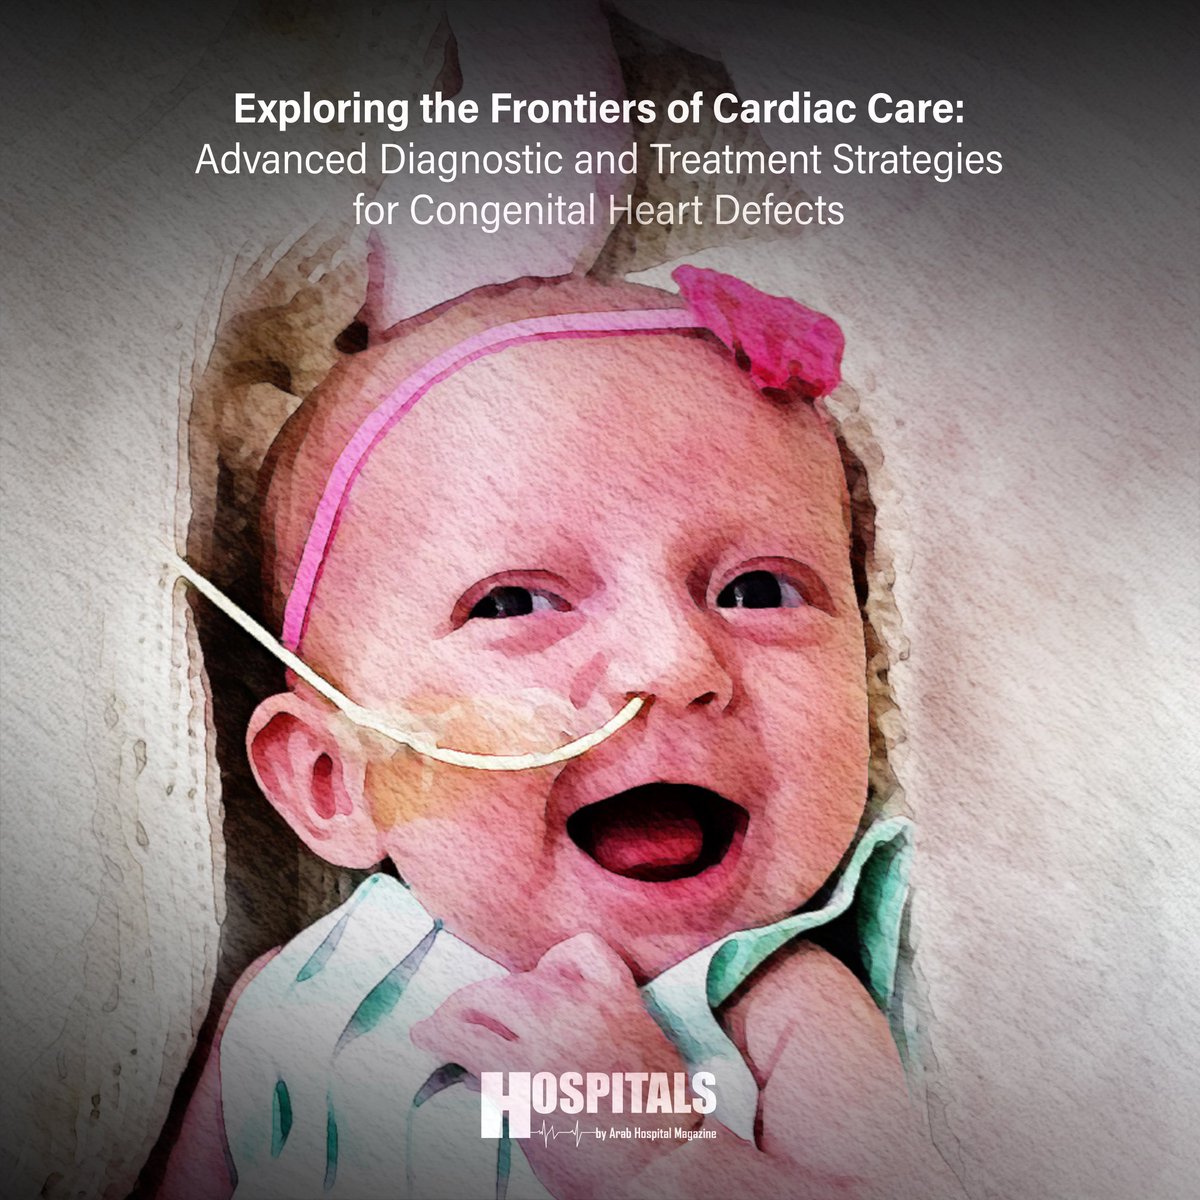 #CongenitalHeartDefects
Full article: hospitalsmagazine.com/advanced-diagn…